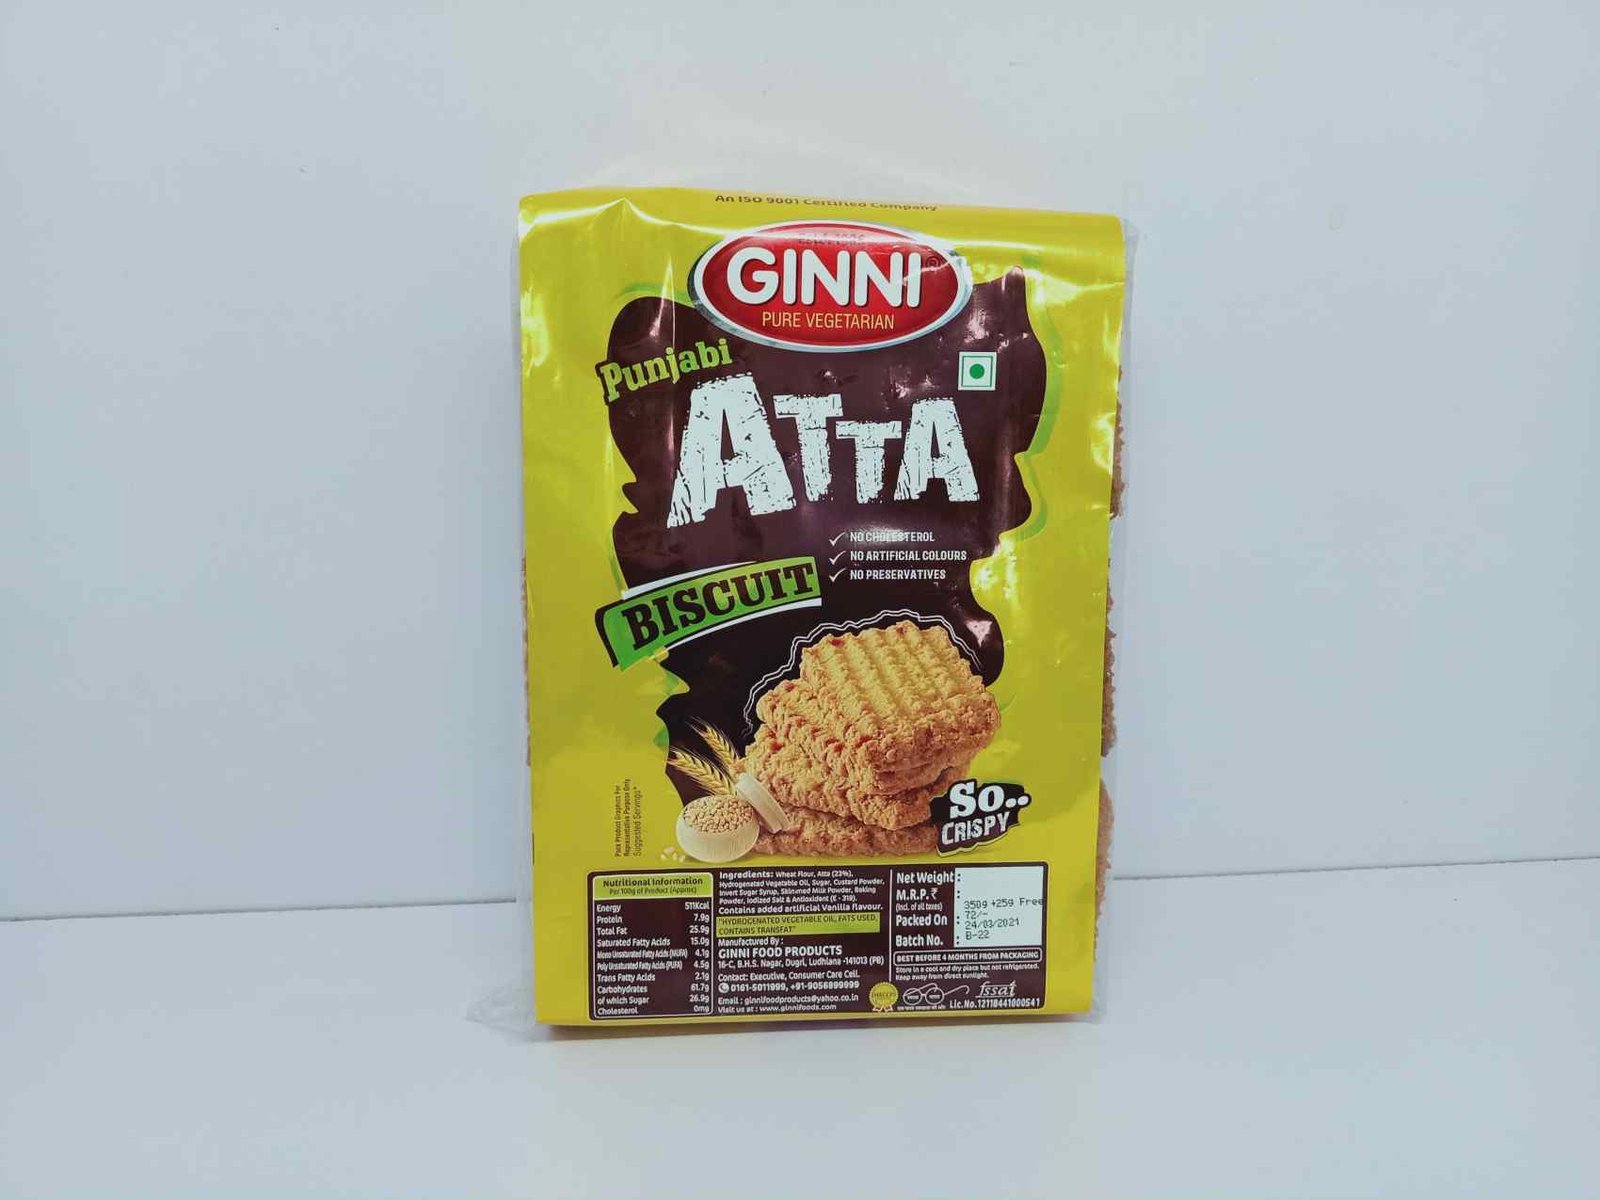 Ginni pure vegetarian punjabi Atta biscuits, 350 grams + 25 grams free